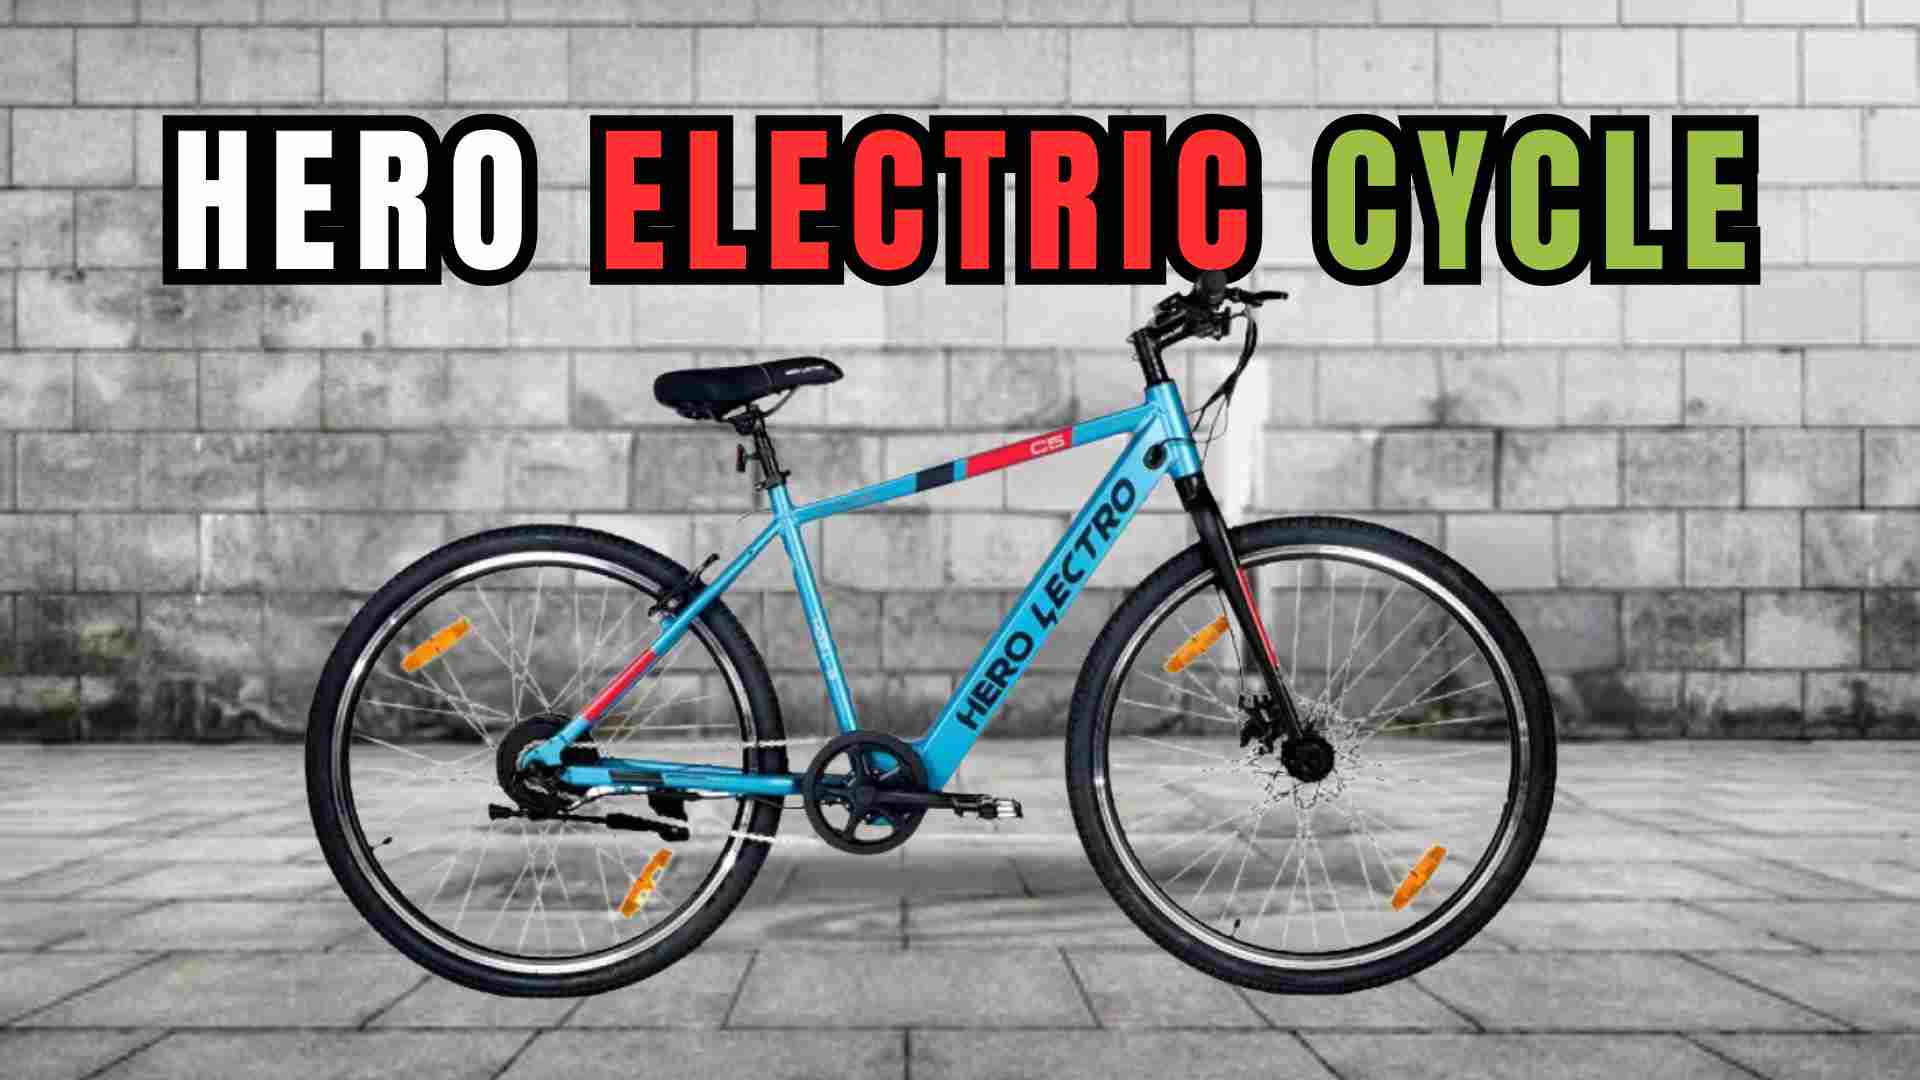 HERO ELECTRIC CYCLE (1)